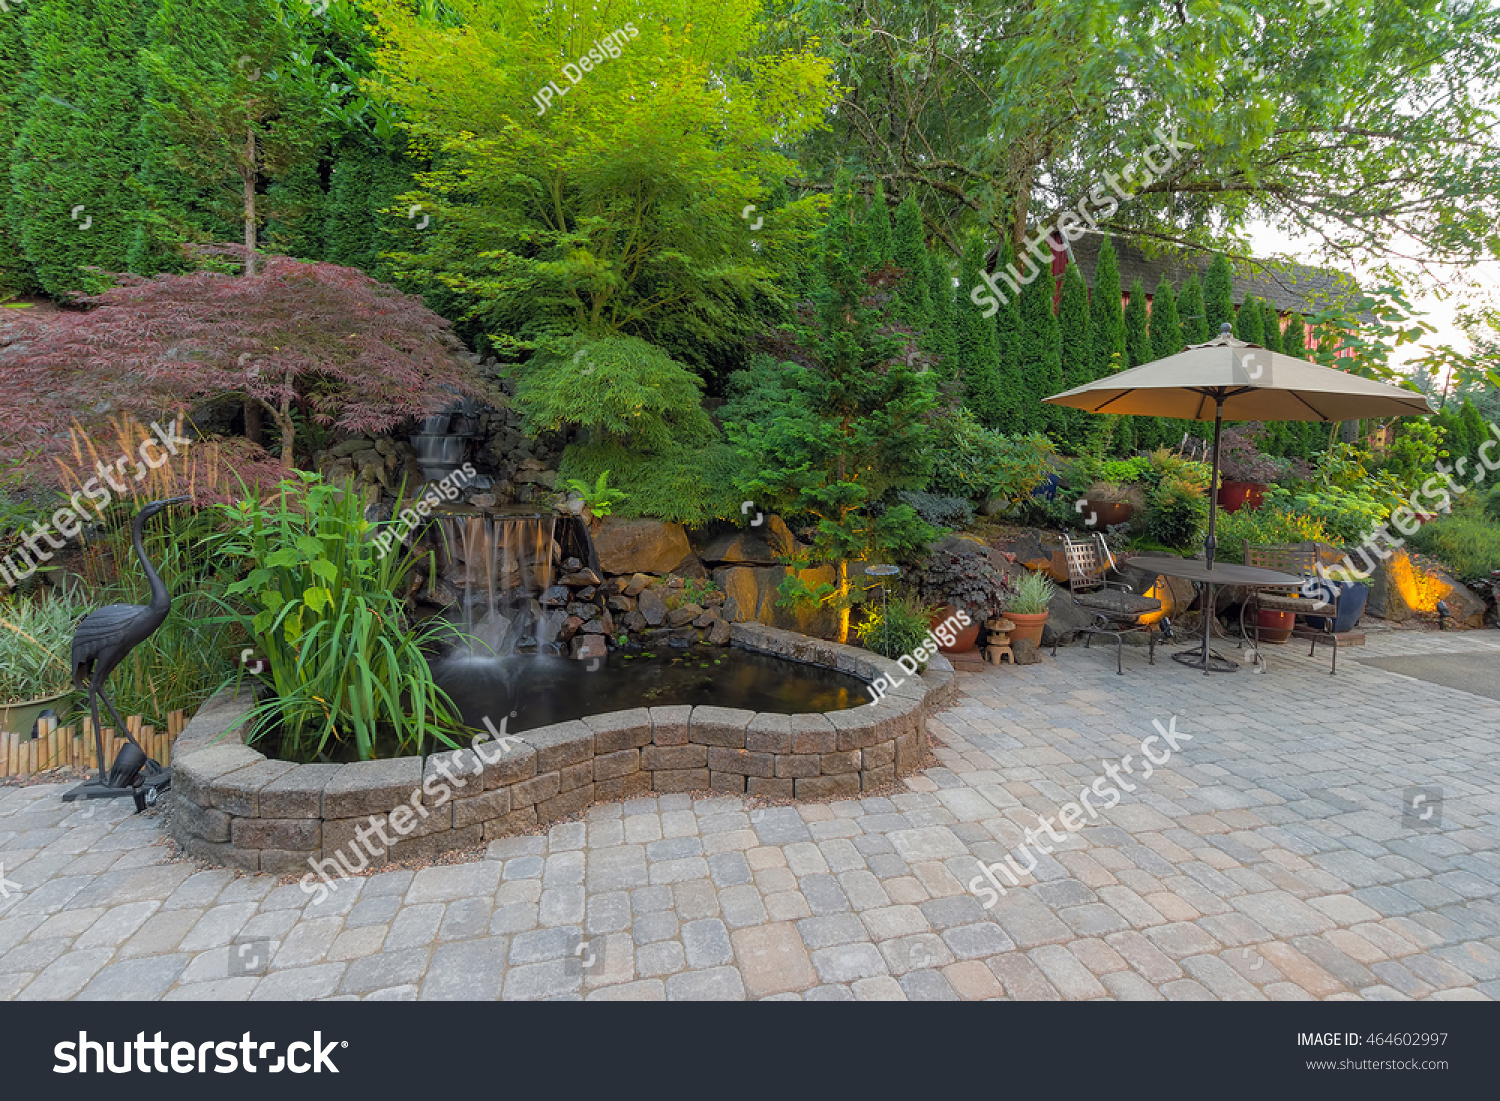 Backyard Garden landscaping with waterfall pond trees plants trellis decor furniture brick pavers patio hardscape #464602997